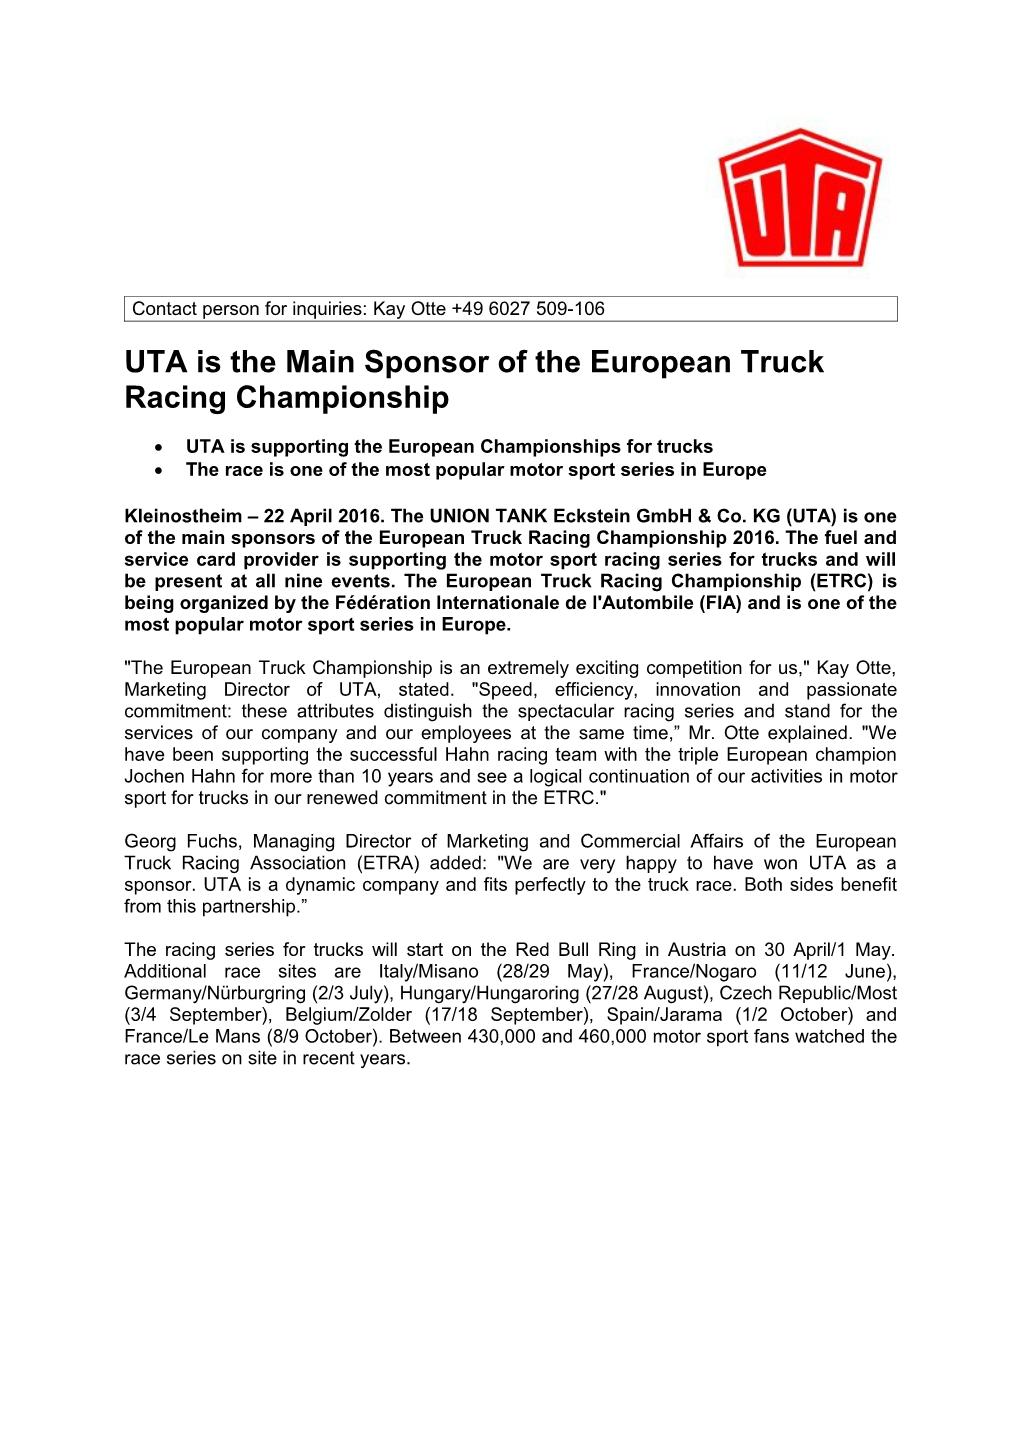 UTA Is the Main Sponsor of the European Truck Racing Championship